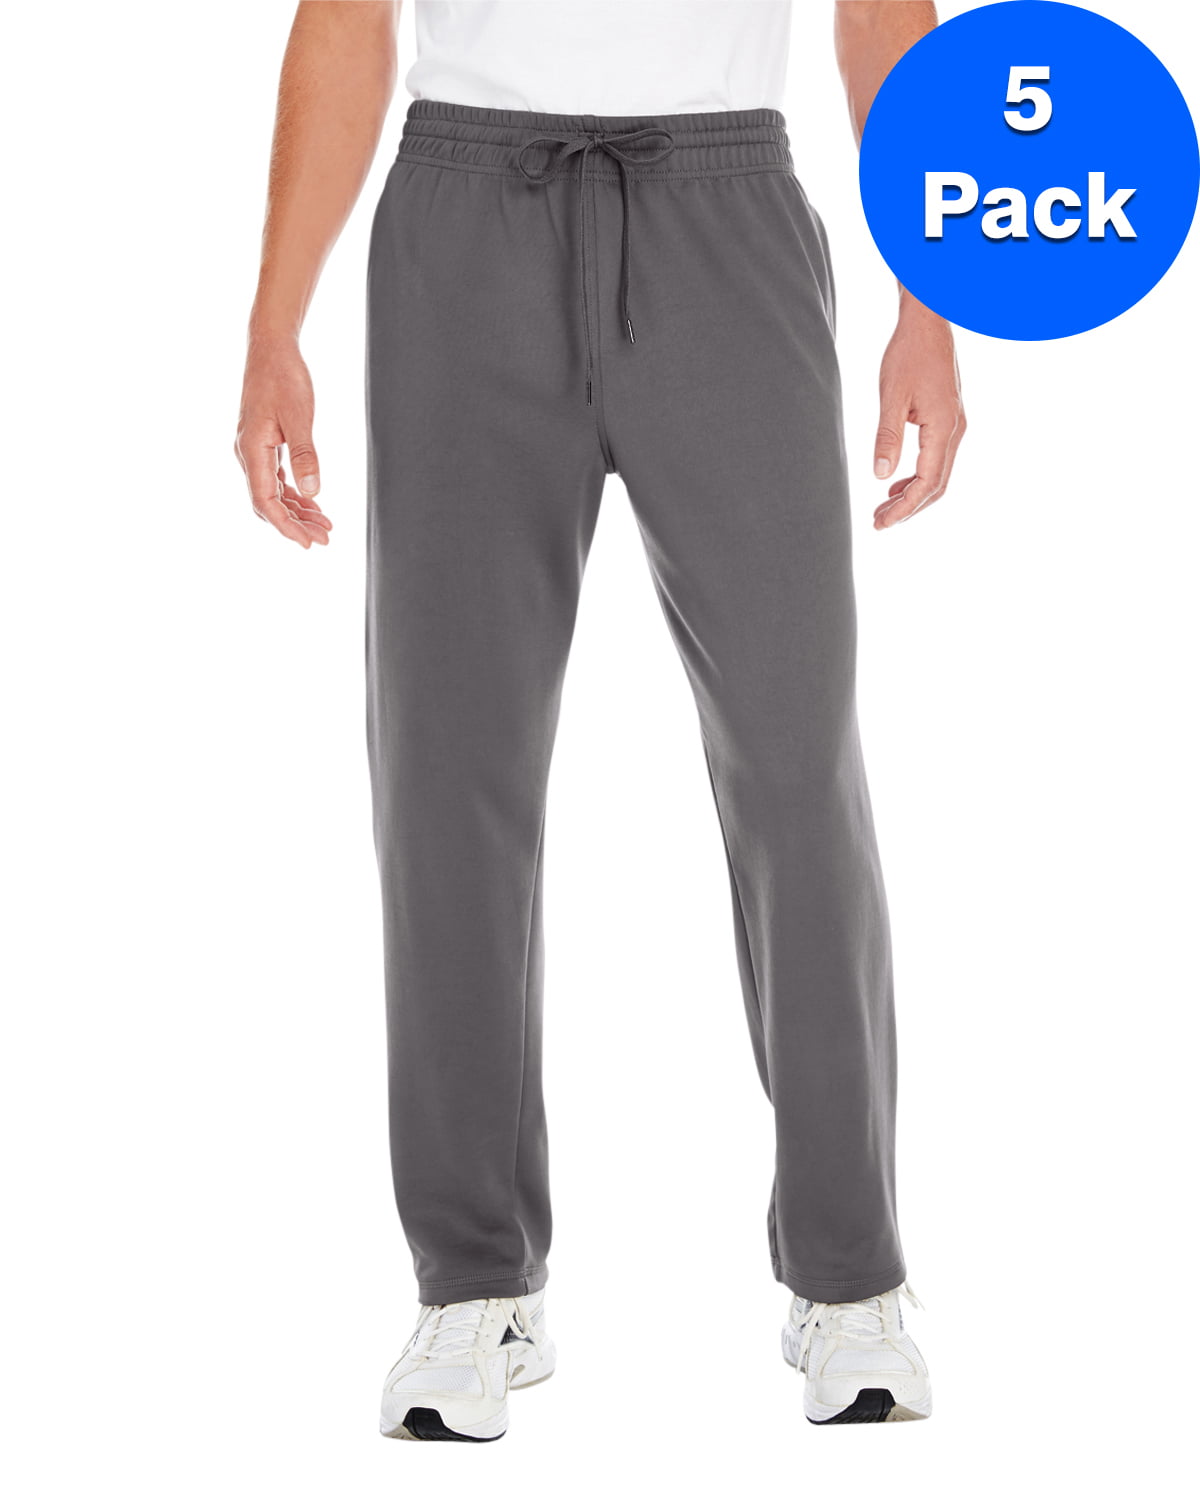 Performance Tech Open Bottom Sweatpants with Pockets 5 Pack - Walmart.com